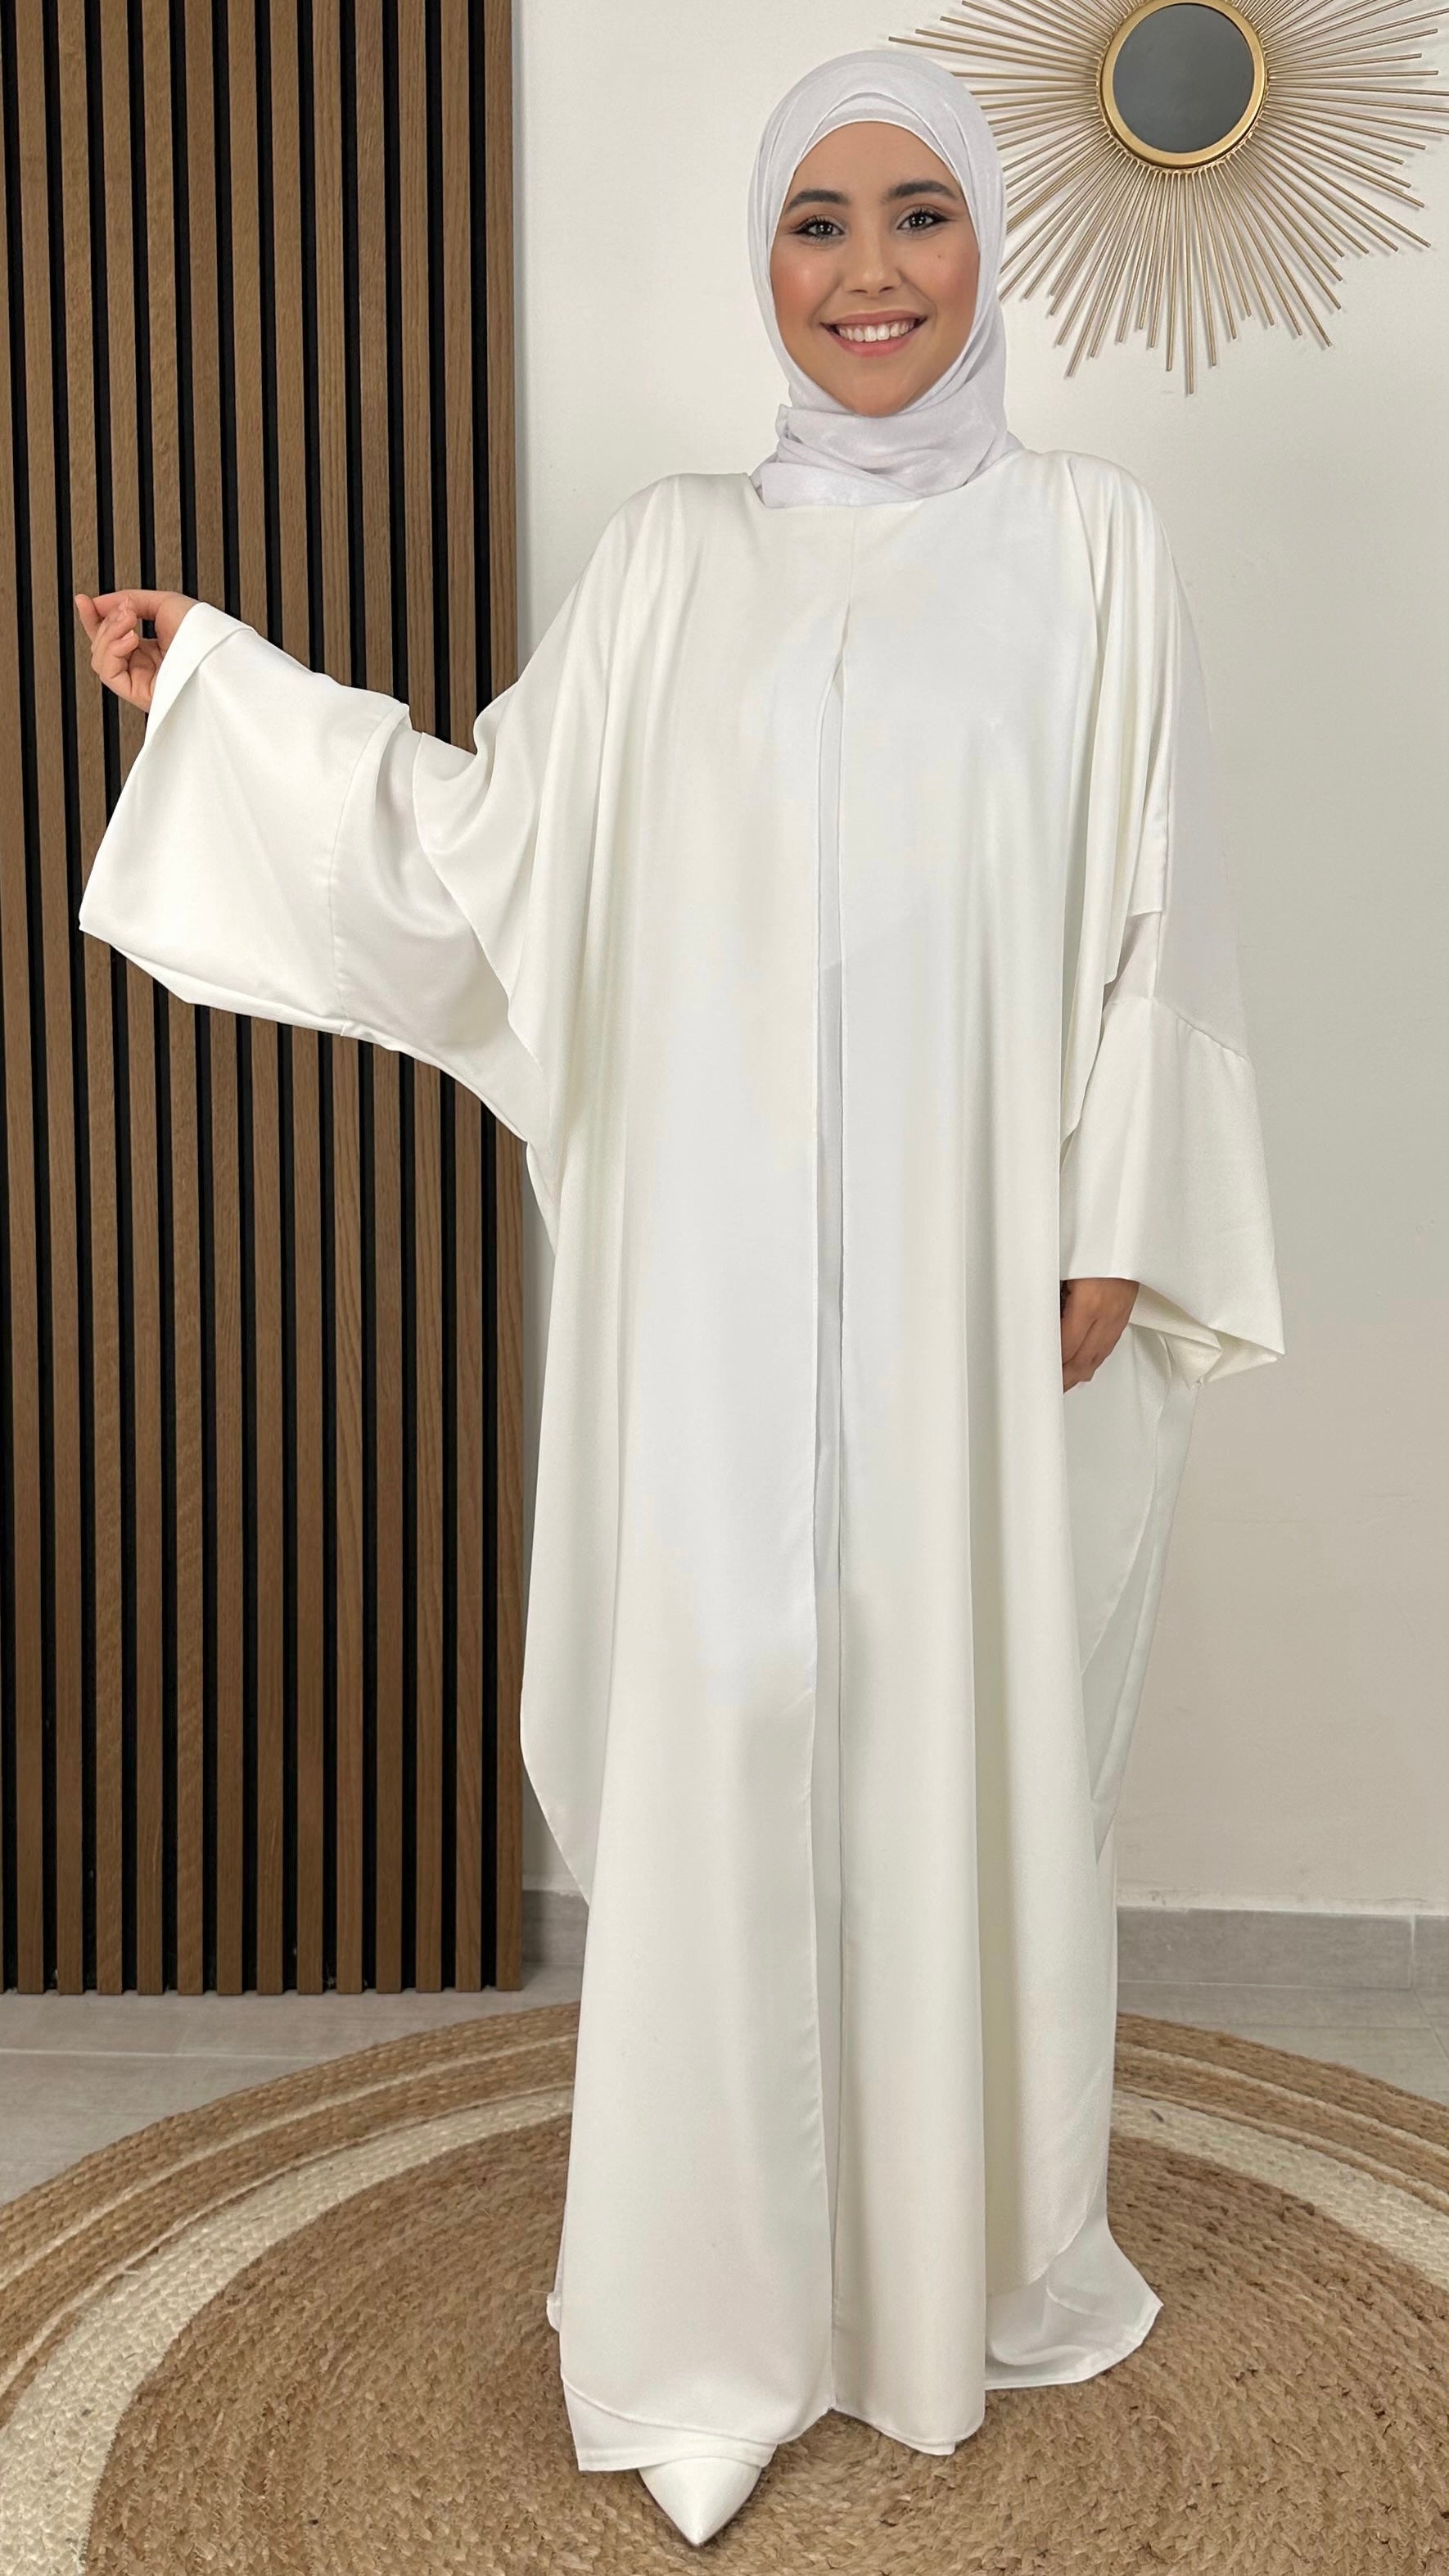 Abaya Layers- Hijab Paradise - Donna musulmana - hijab bianco -donna elegante- omra outfit - hajj outfit - donna musulmana - sorriso 